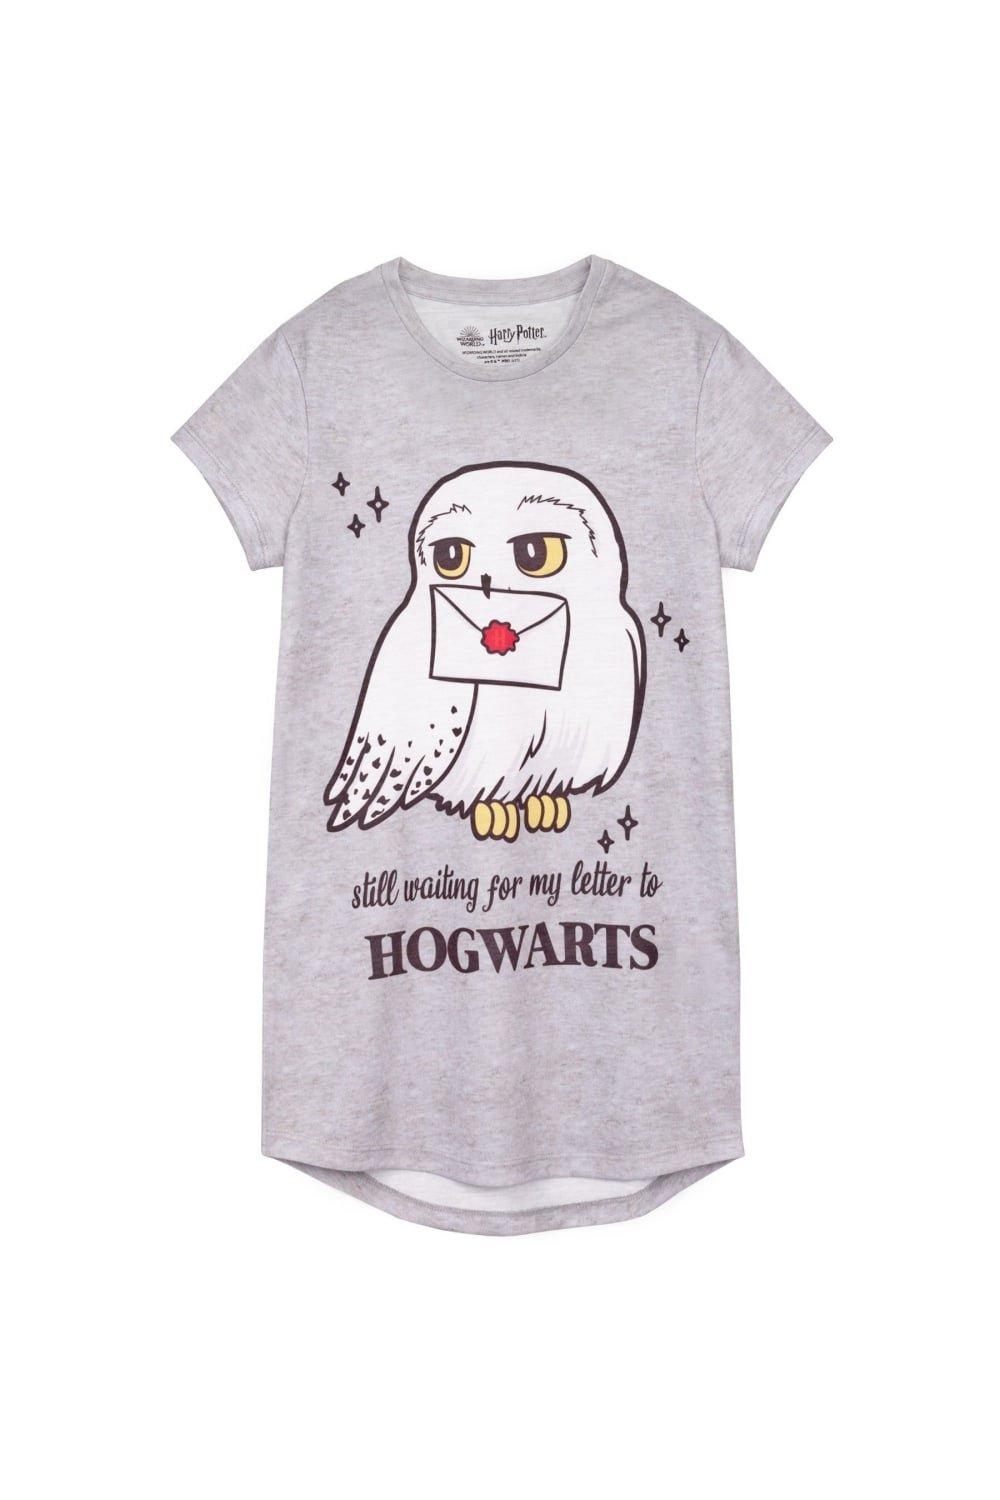 Hedwig Hogwarts Nightie